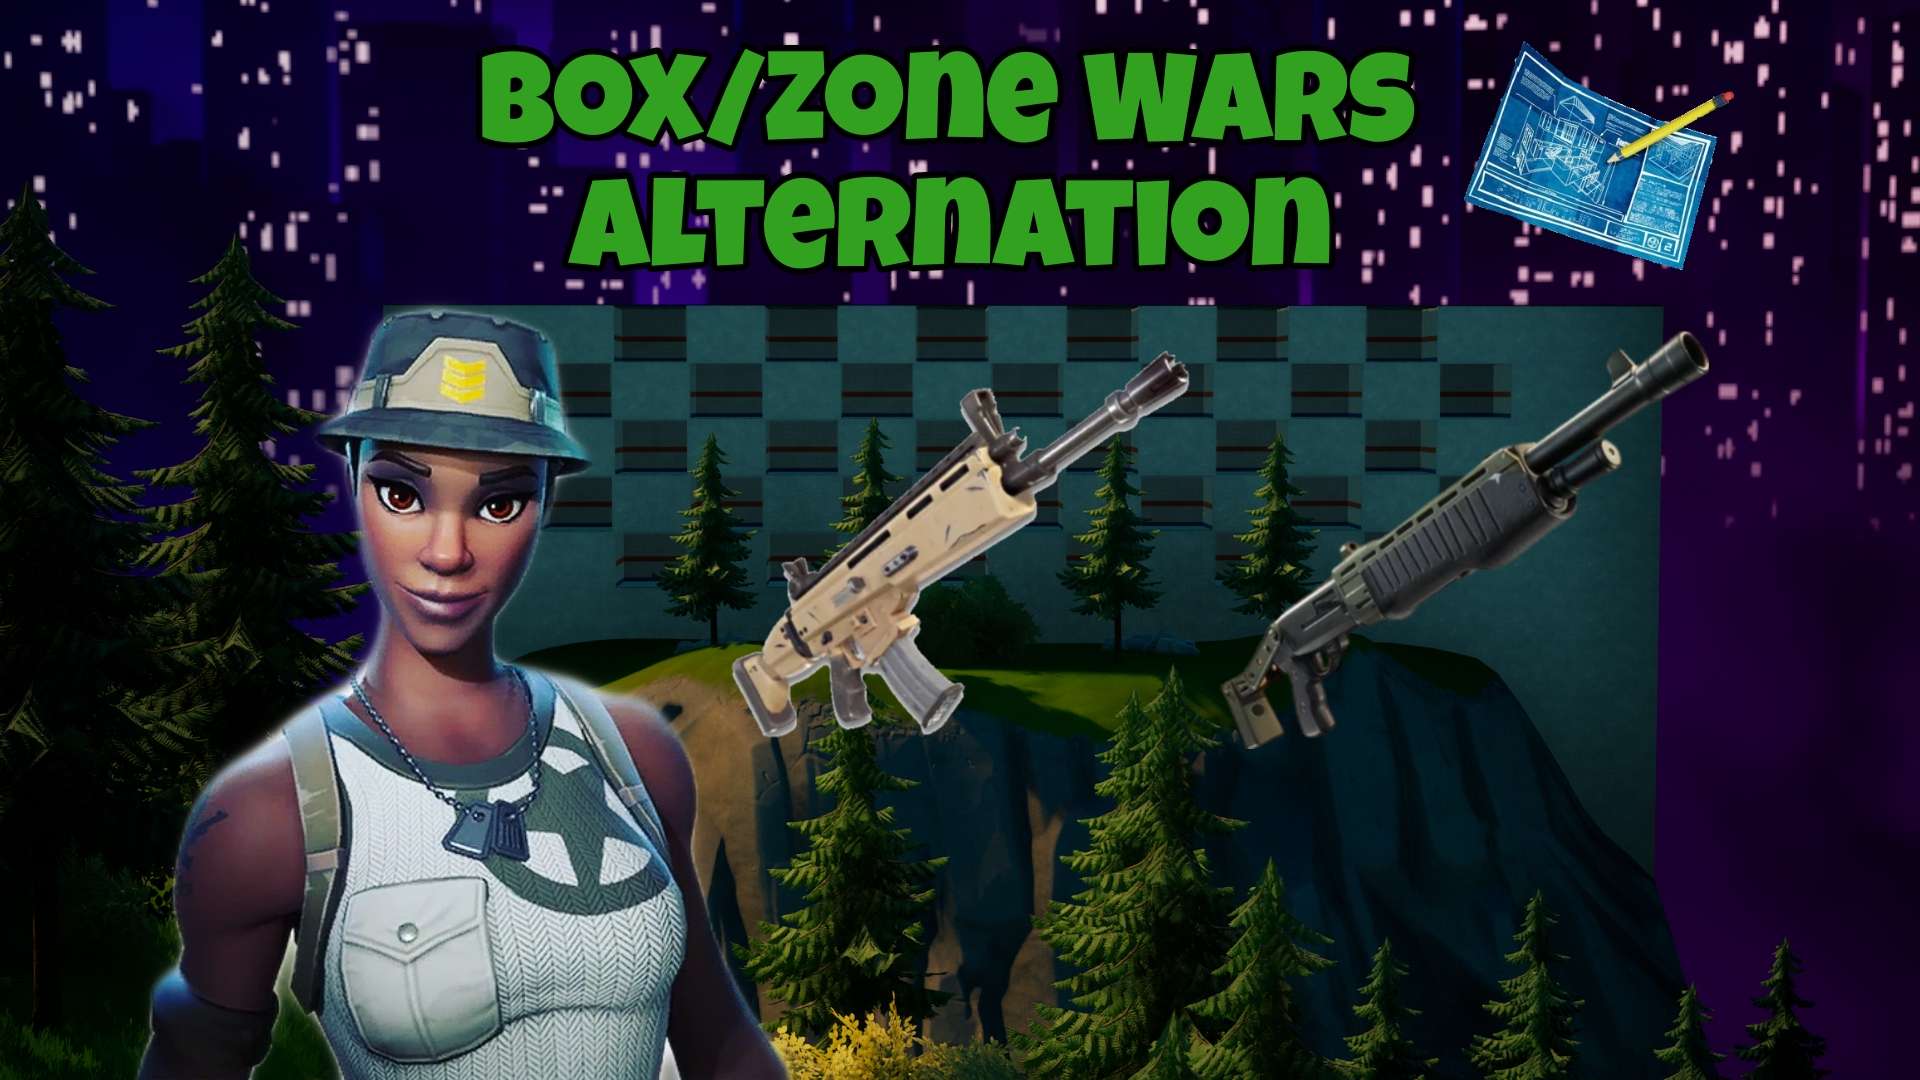 BOX/ZONE WARS ALTERNATION